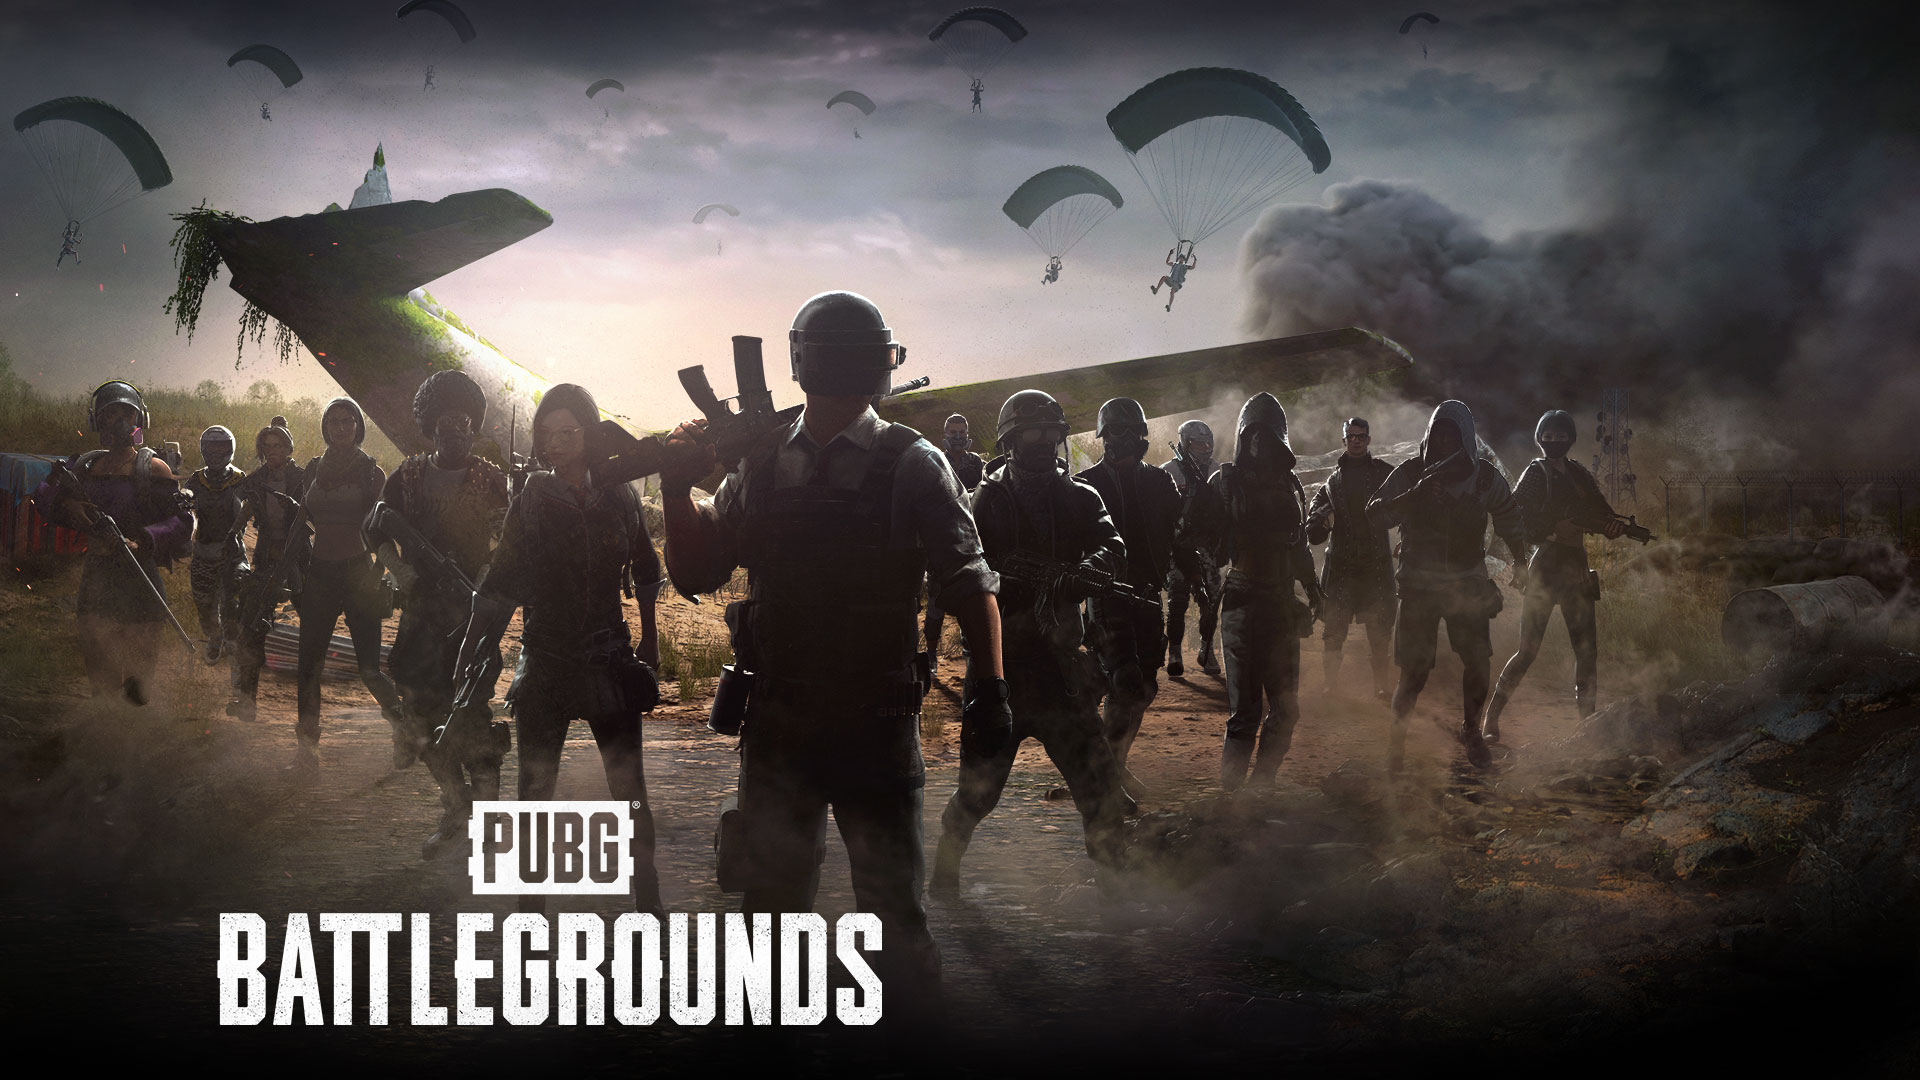 PUBG: Battlegrounds.墜落した飛行機の周りにプレイヤーが集結し、残りのプレイヤーがパラシュートで降下している。